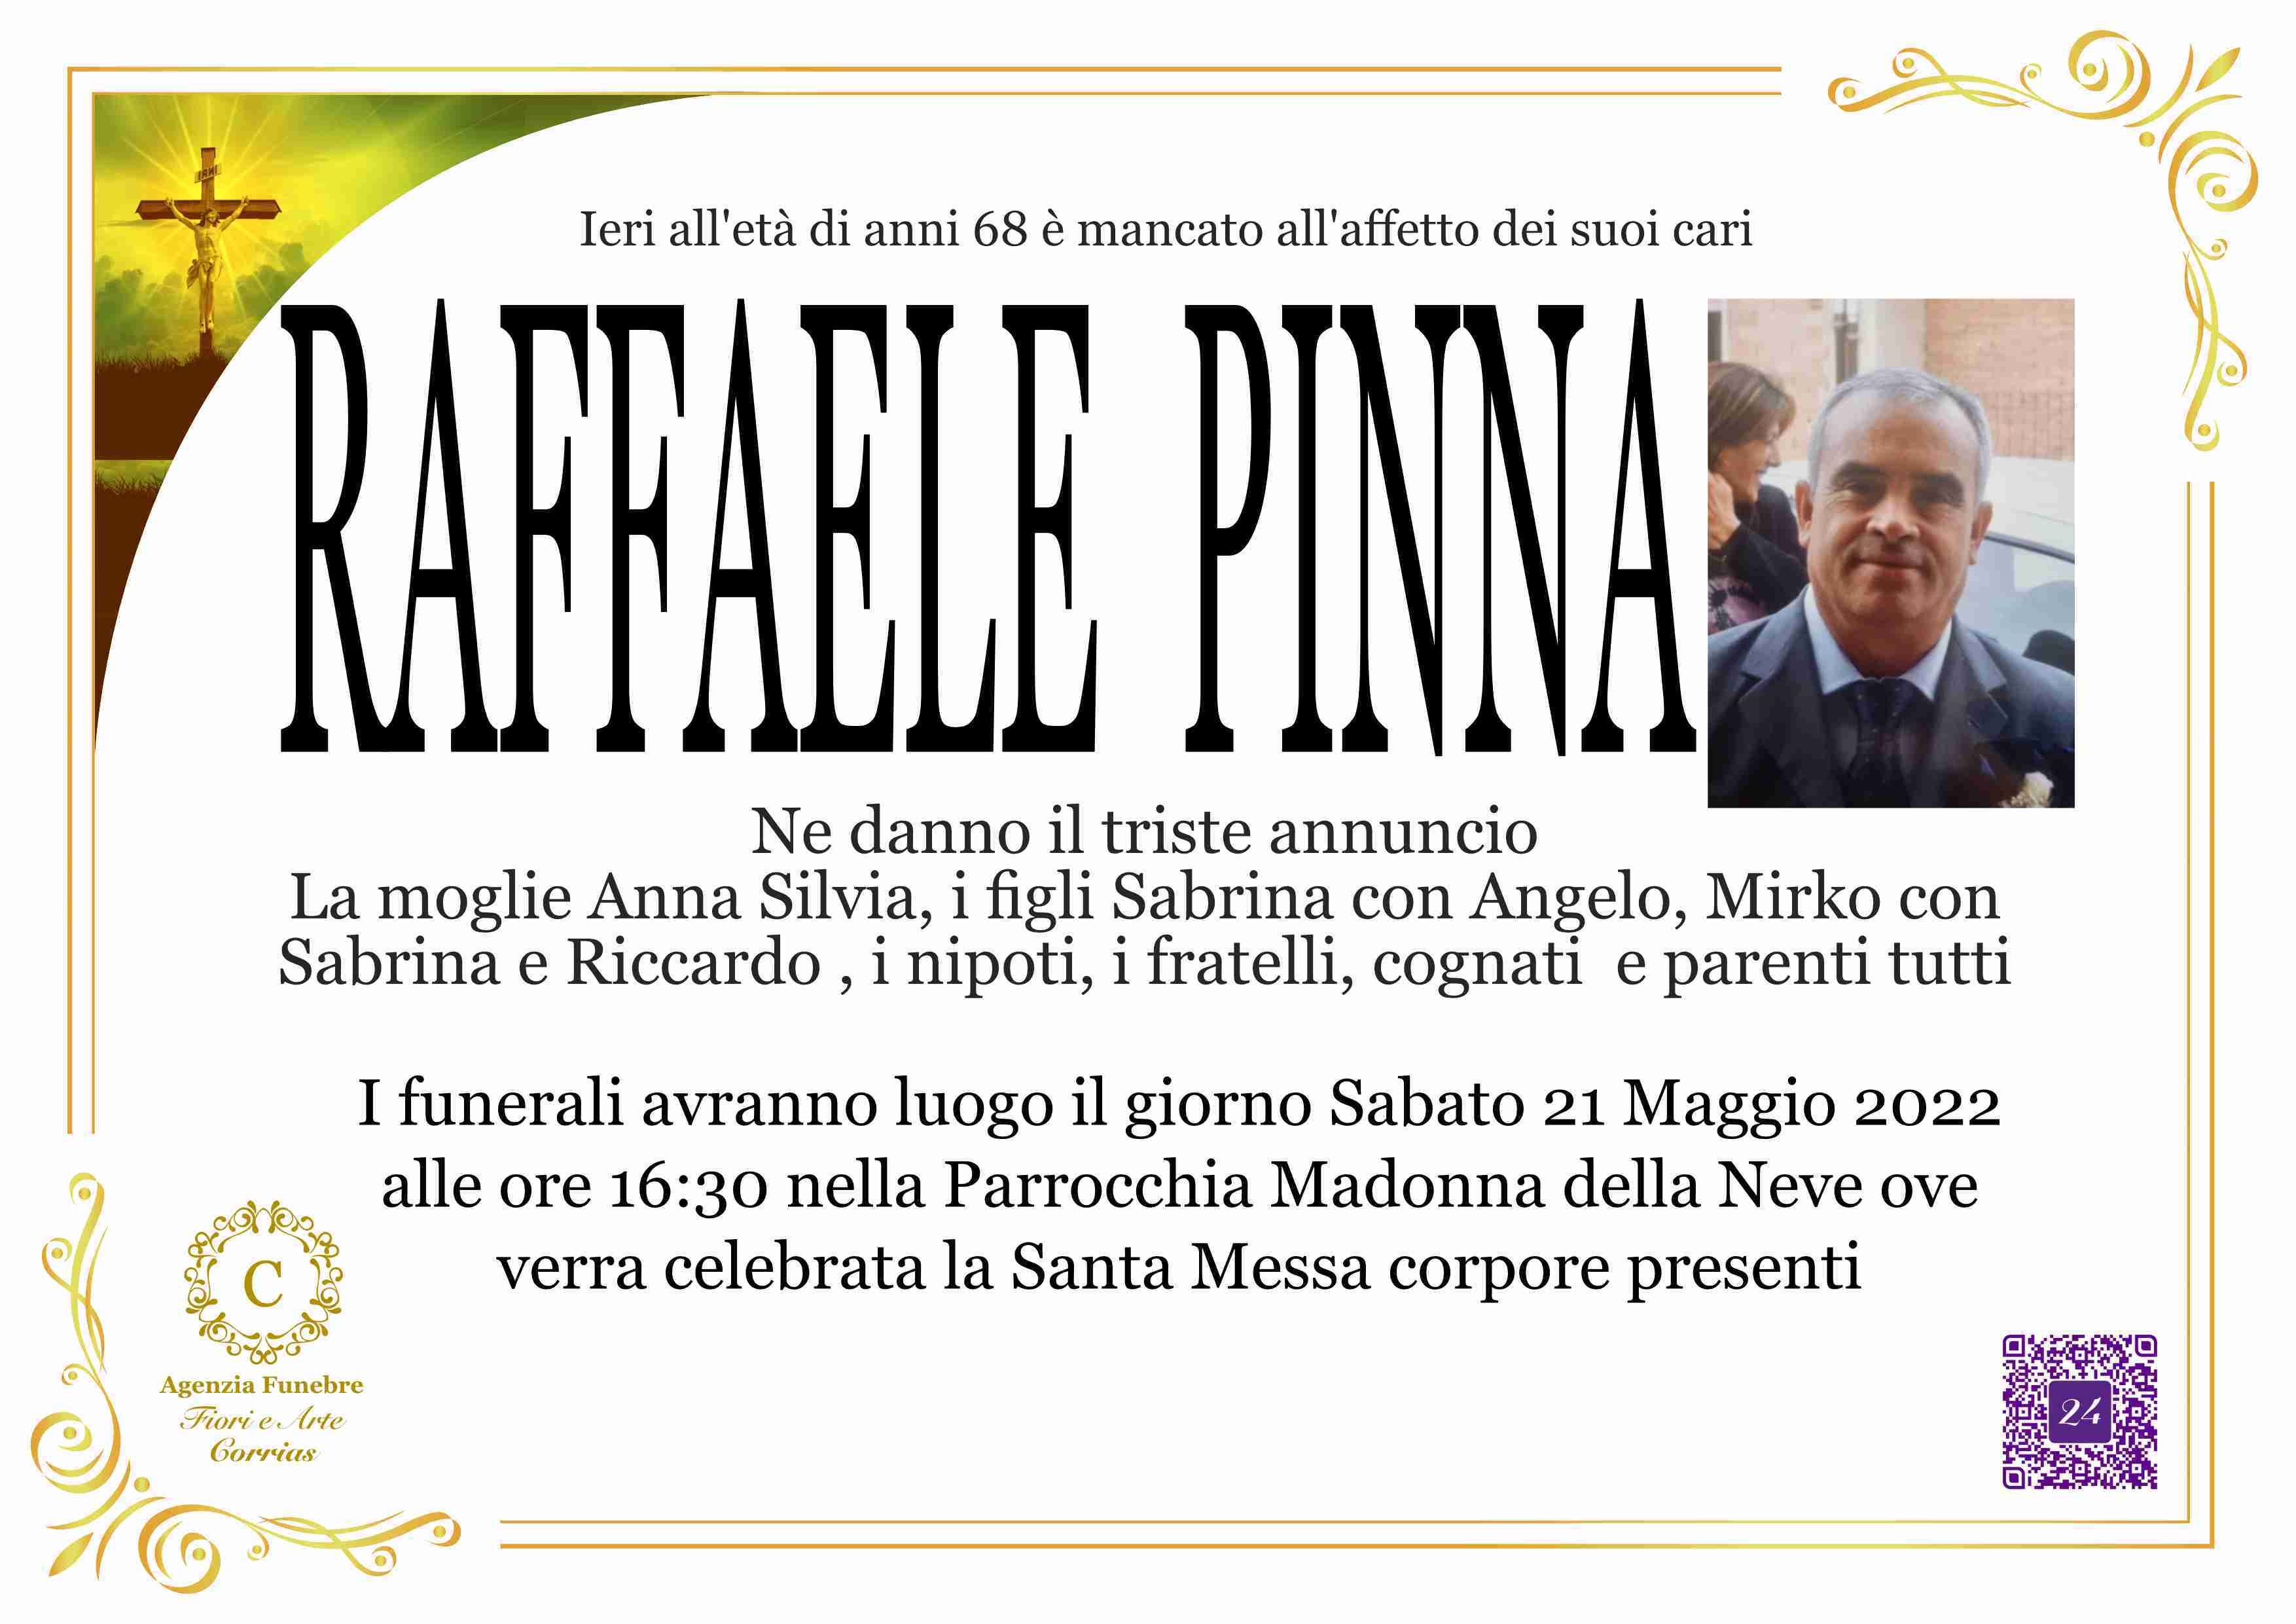 Raffaele Pinna